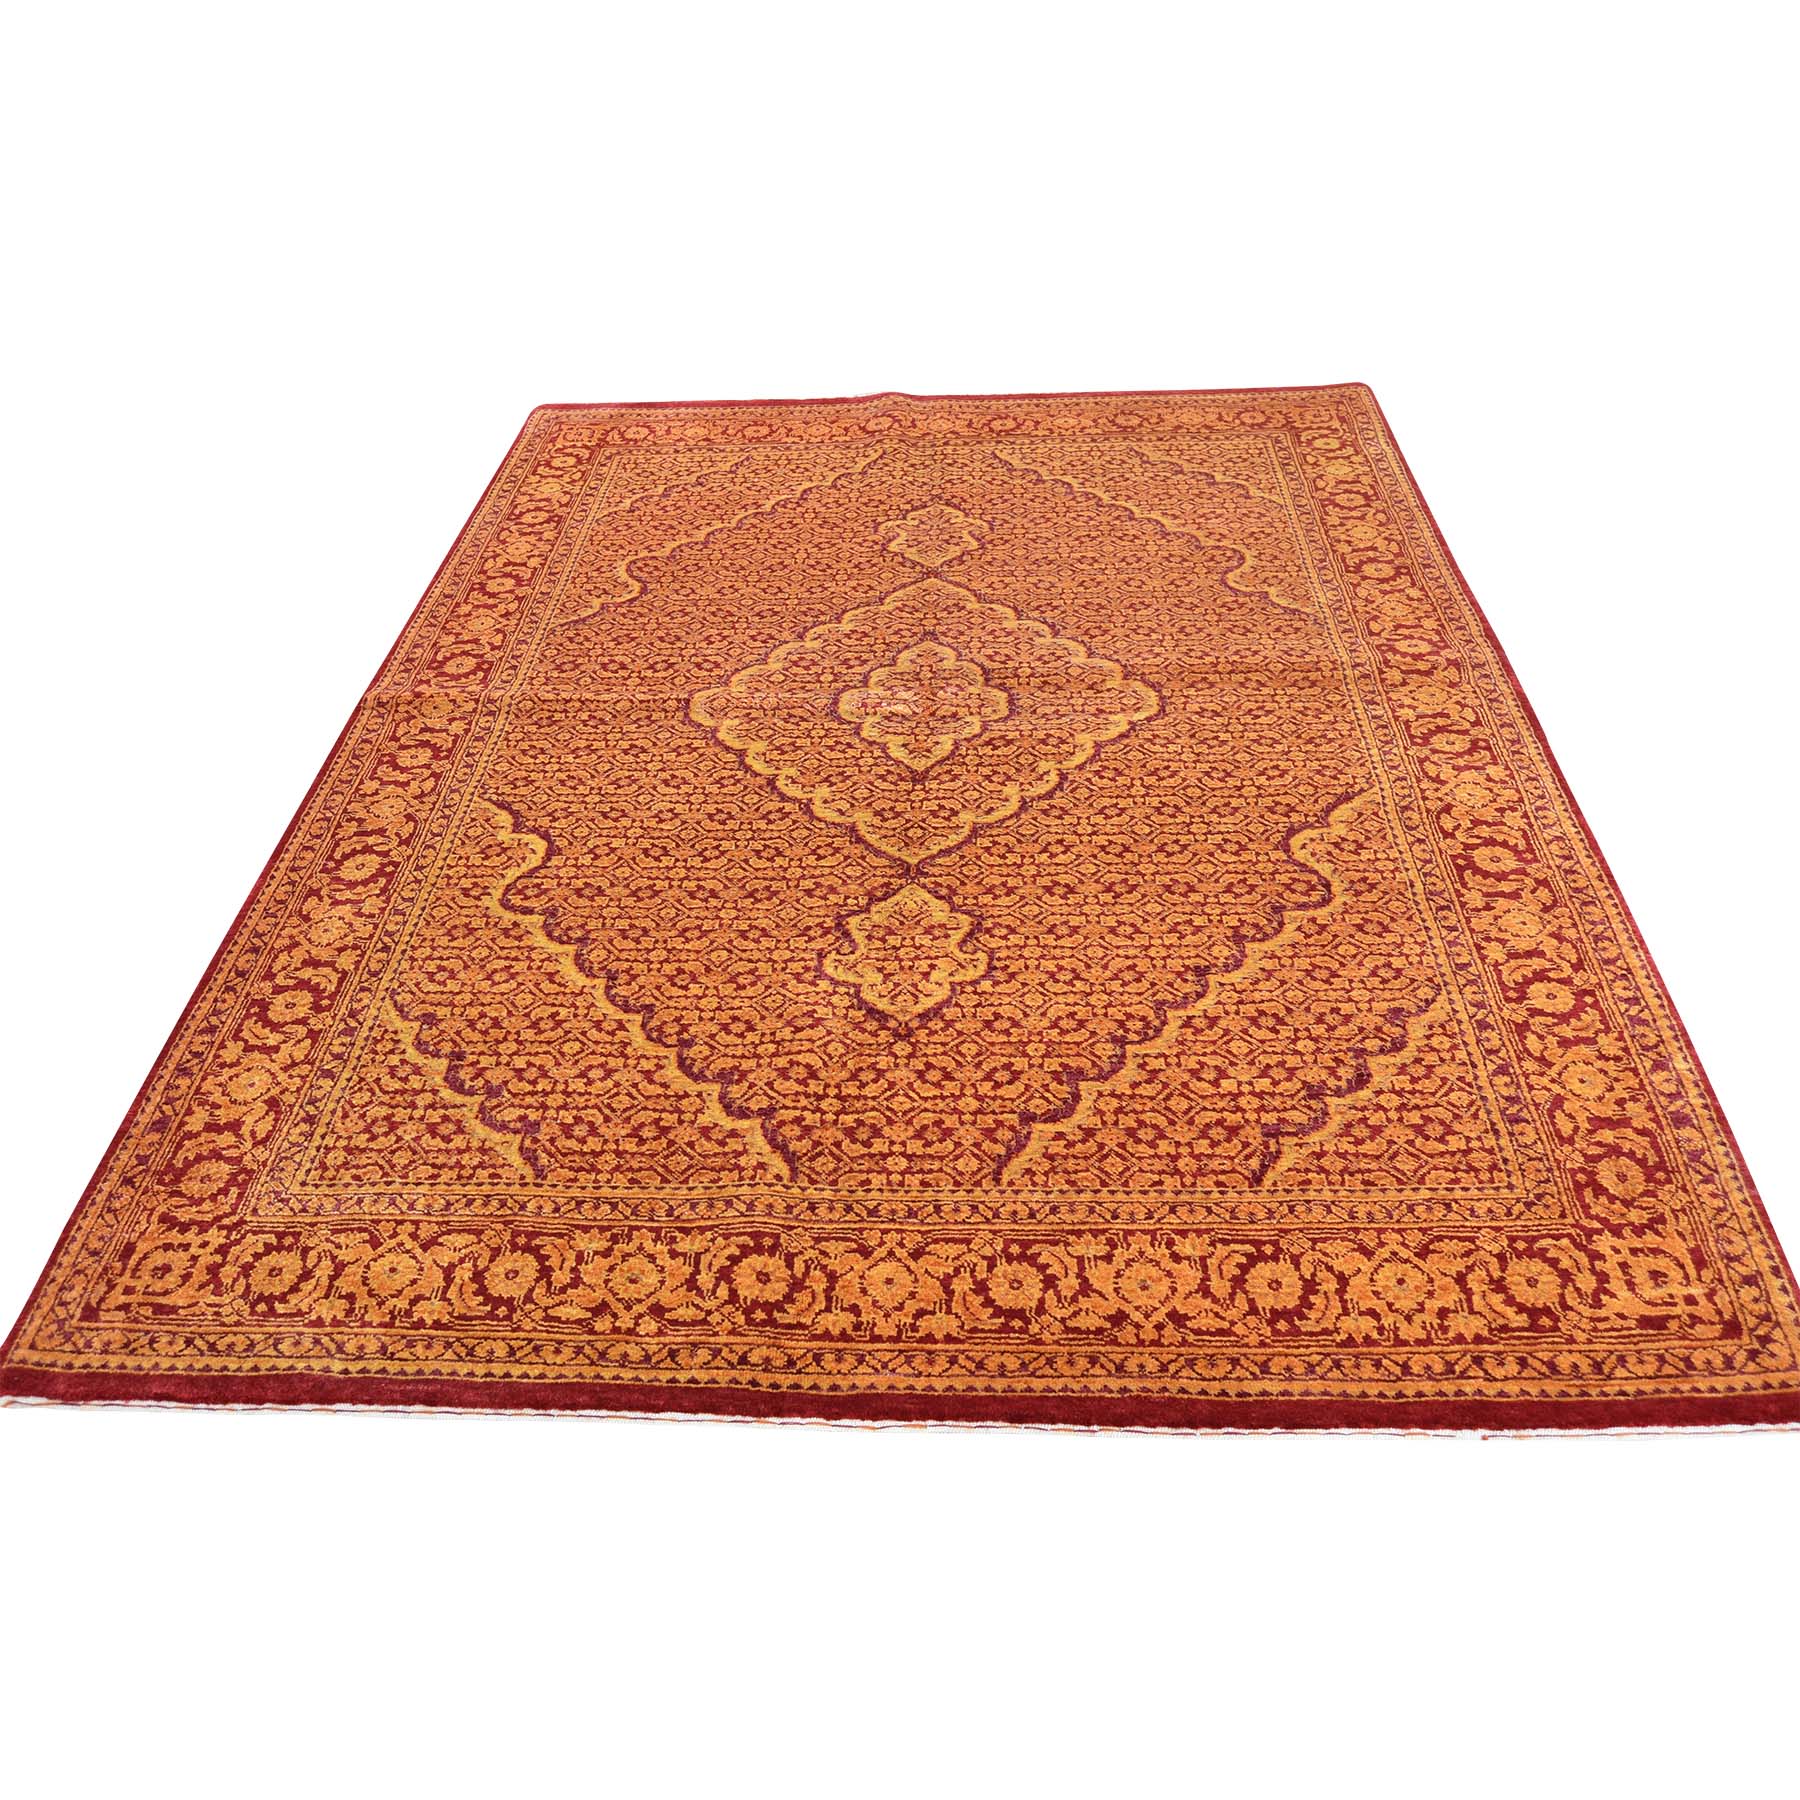 5'x6'9" On Clearance Tone on Tone Tabriz Mahi Wool and Silk Hand Woven Oriental Rug 